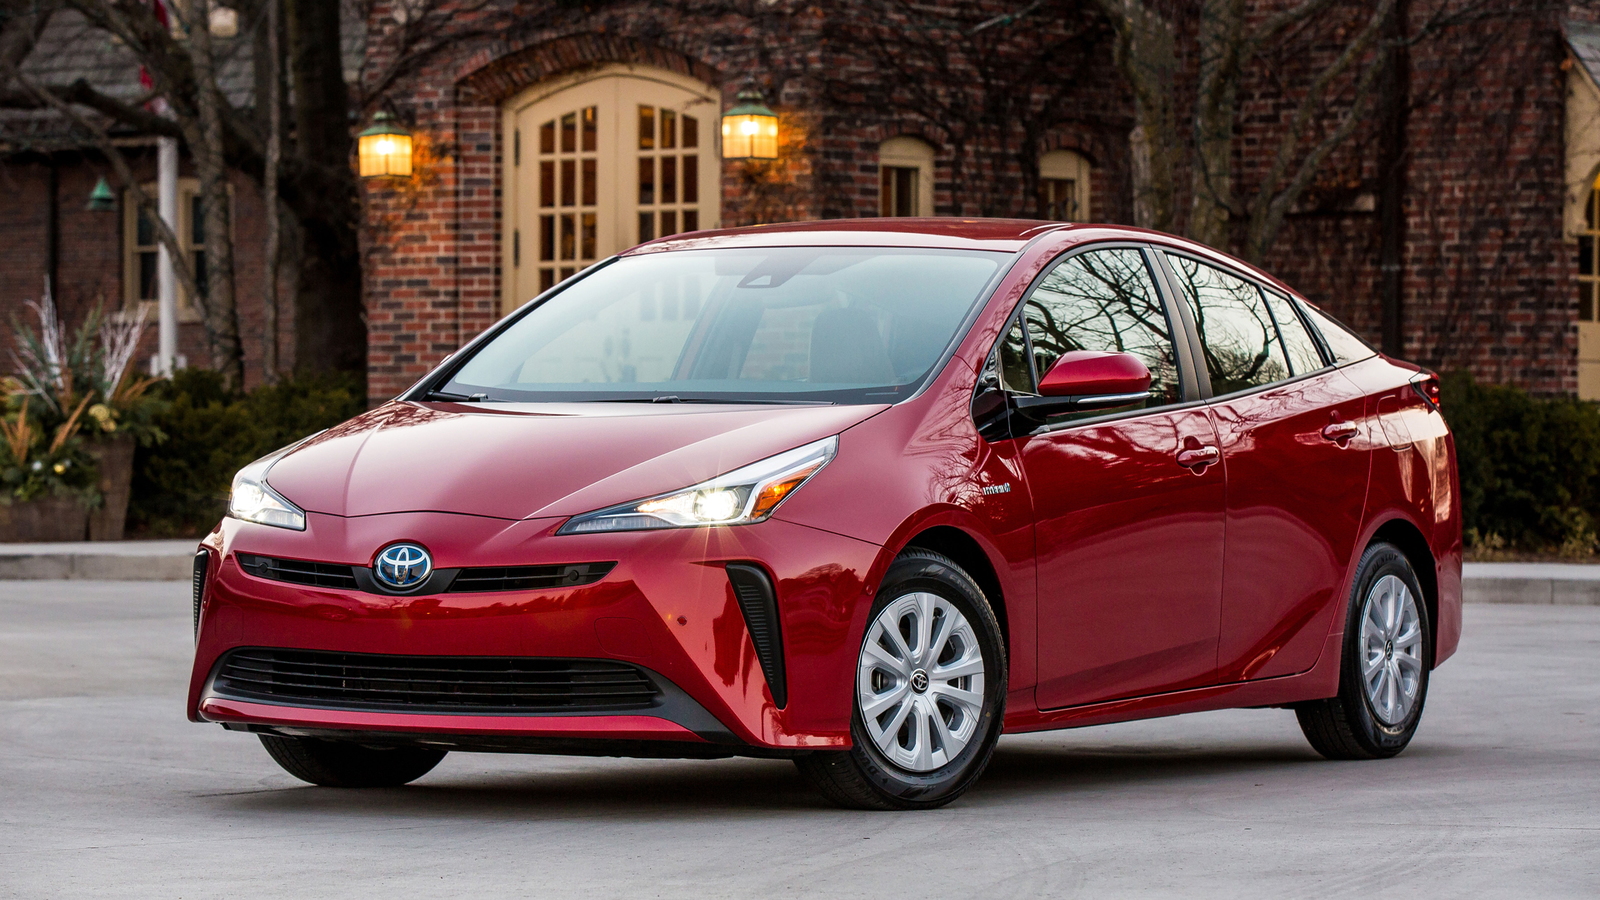 Toyota Prius News Green Car Photos, News, Reviews, and Insights